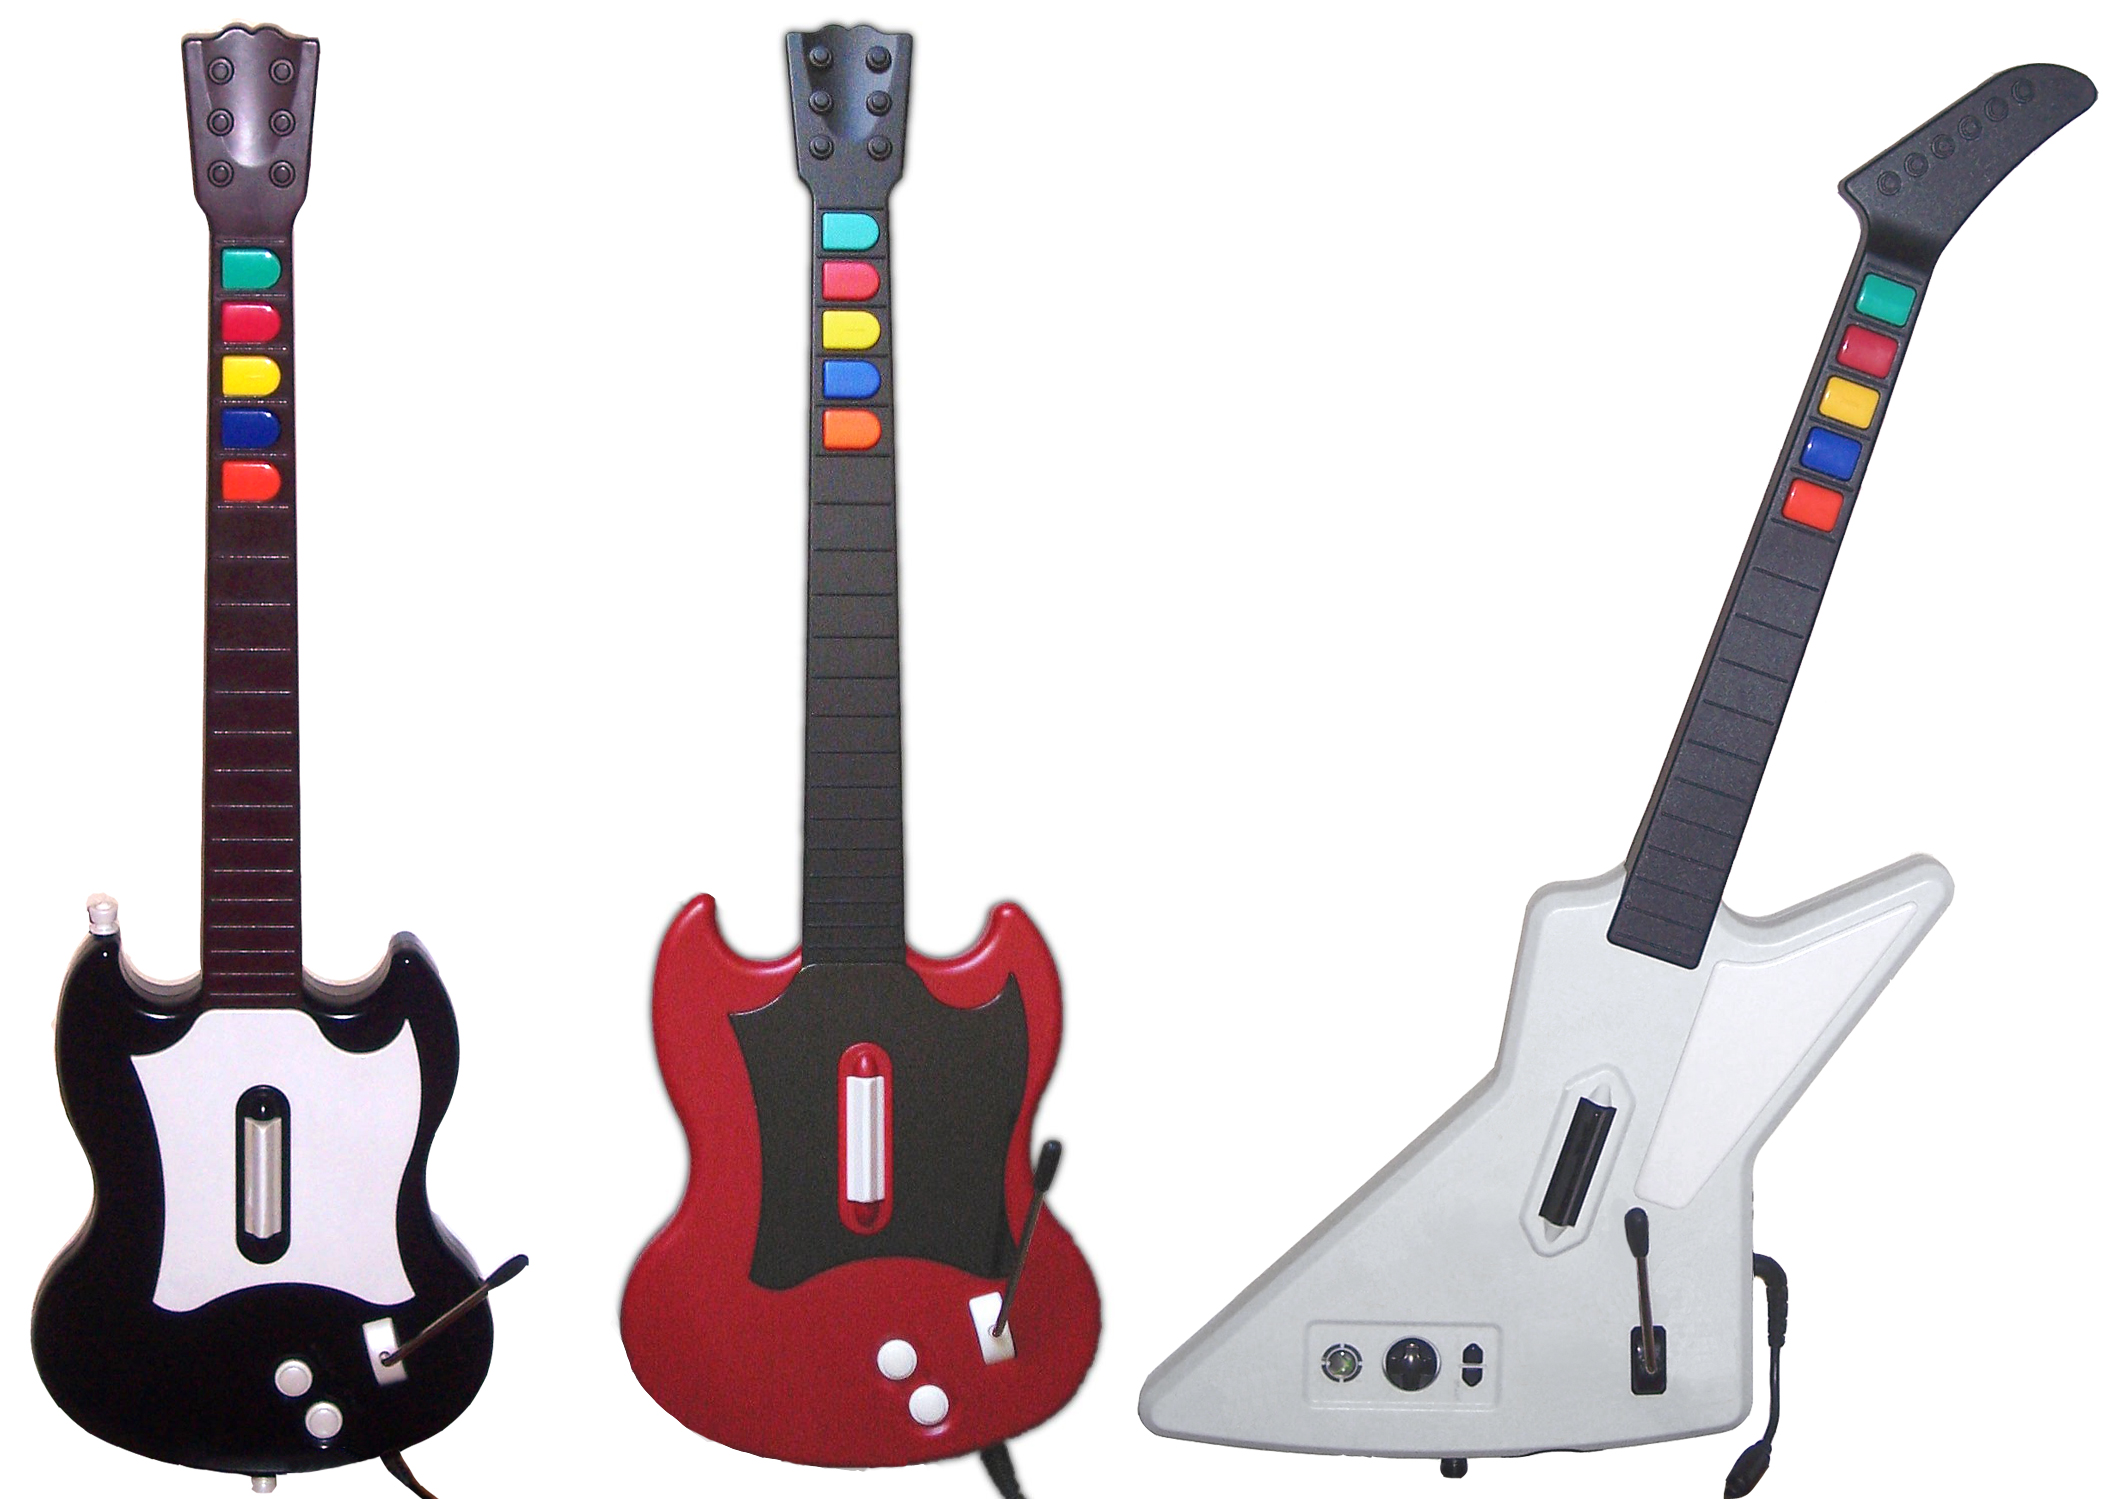 File:Guitar Hero series controllers.jpg - Wikimedia Commons